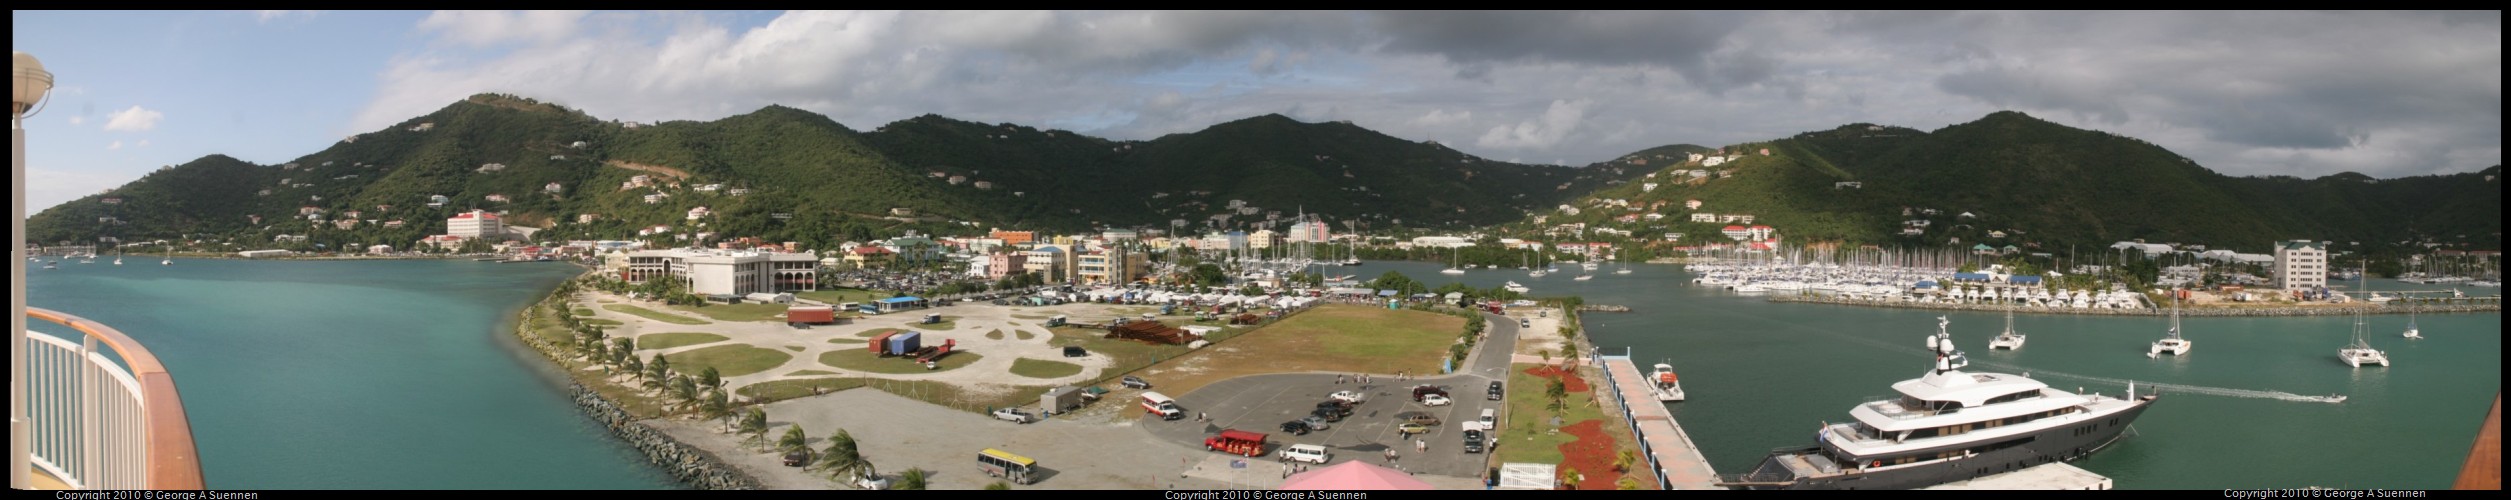 pano-Tortola-1.jpg - Tortola Harbor, BVI